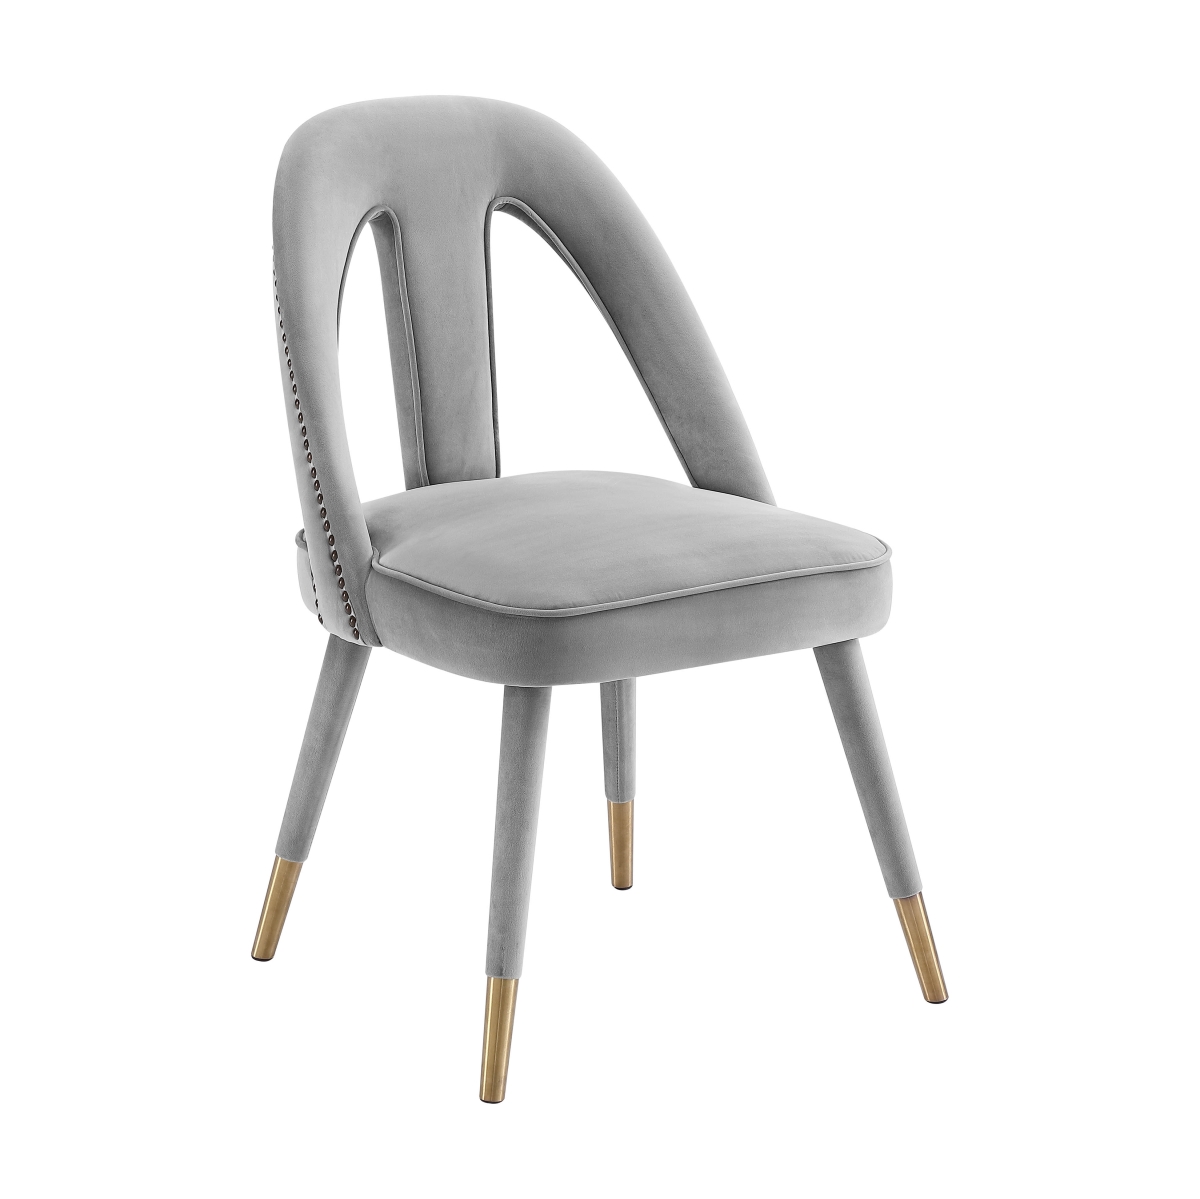 TOV-D6363 20.5 x 24 x 34.3 in. Petra Side Chair, Light Grey Velvet -  Tov Furniture